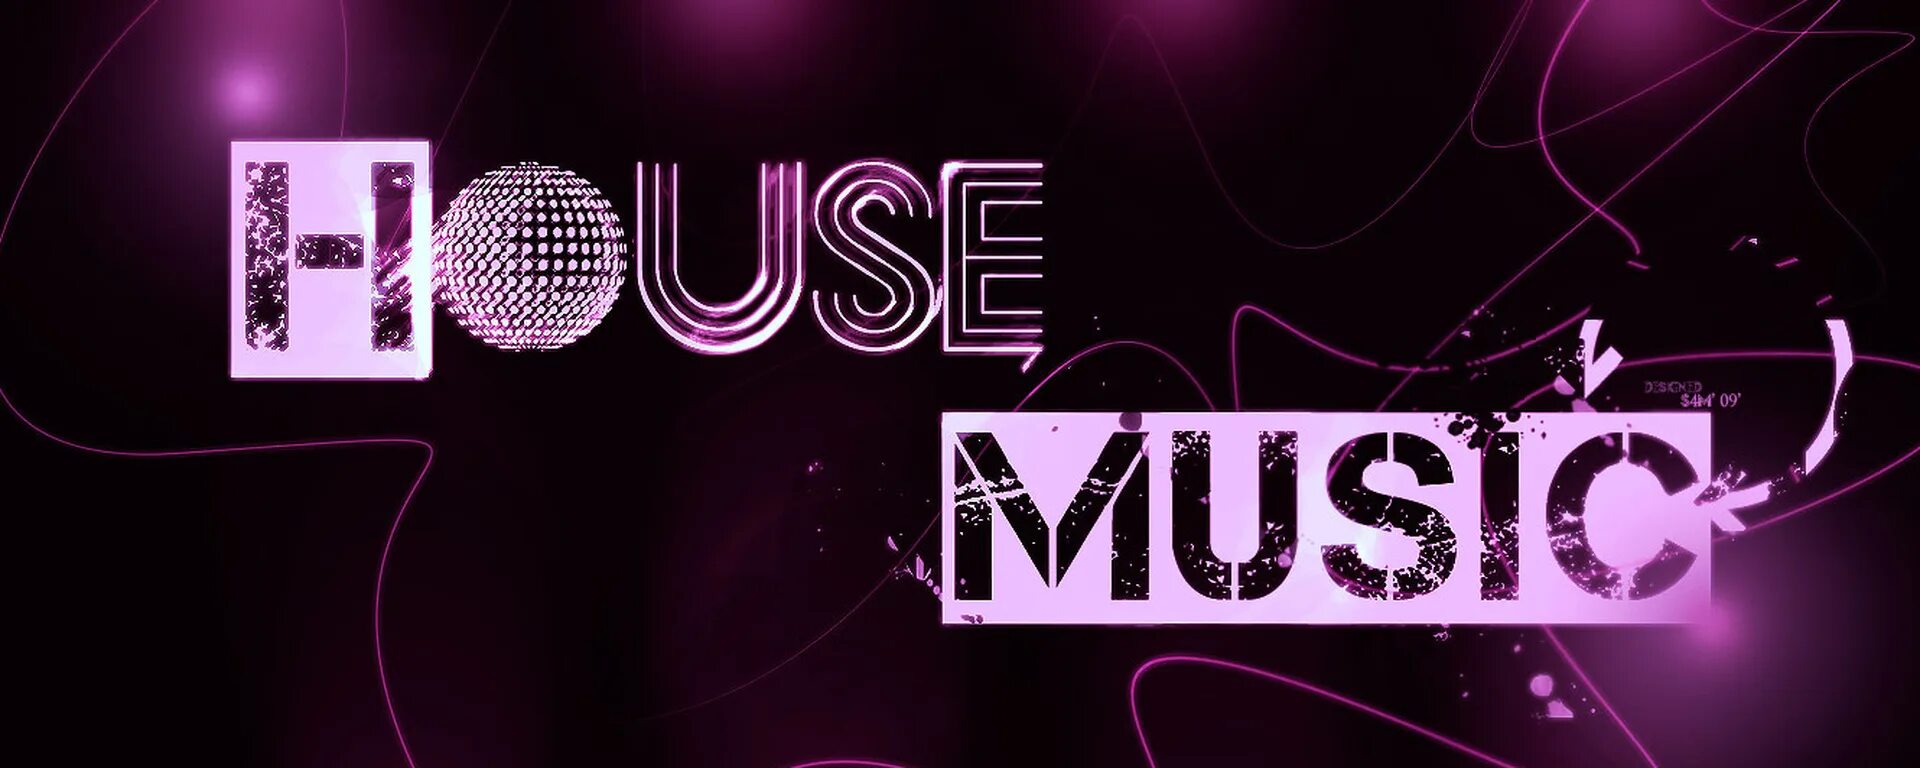 Хаус Мьюзик. House Music картинки. Хаус стиль музыки. House Music обложка. Песня house music